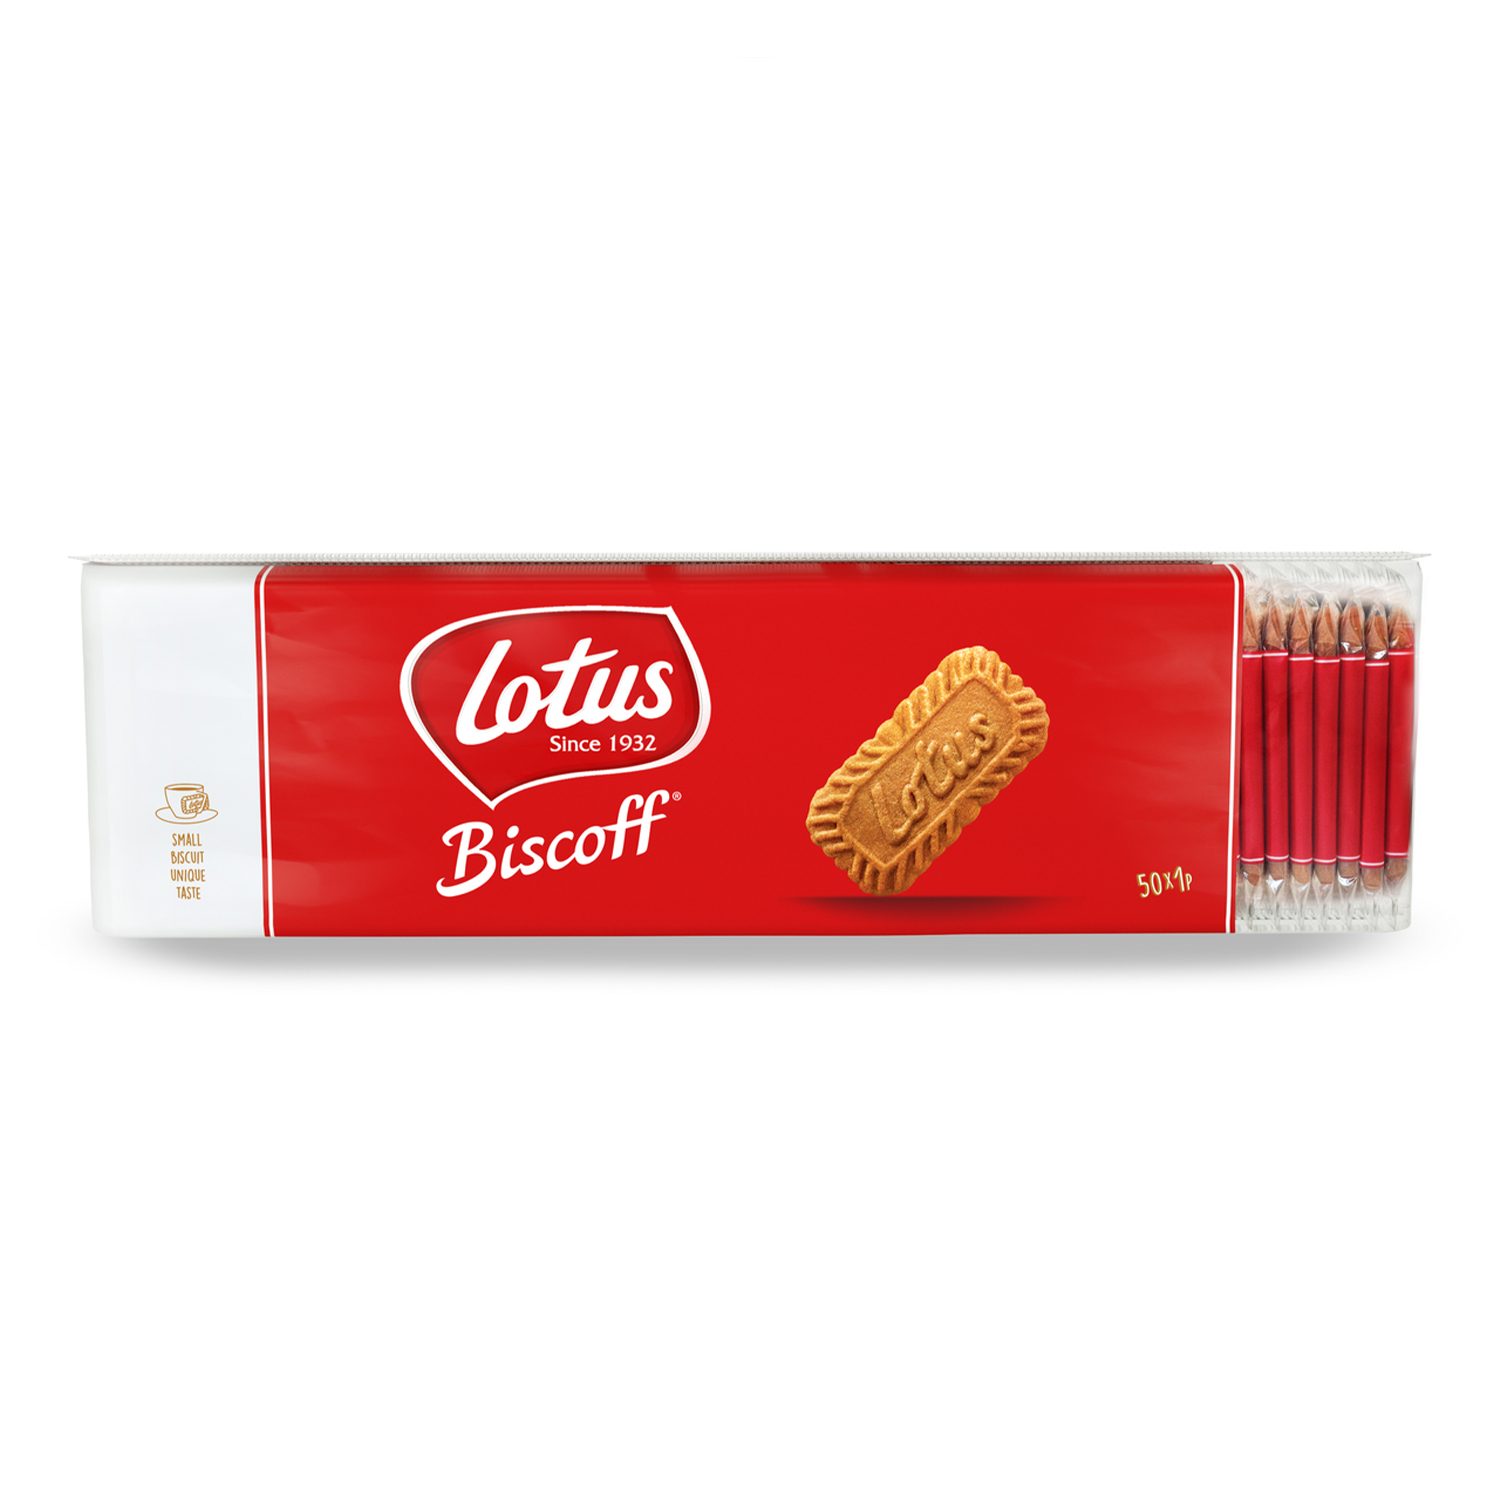 Lotus Coffee Biscuits 50 pcs